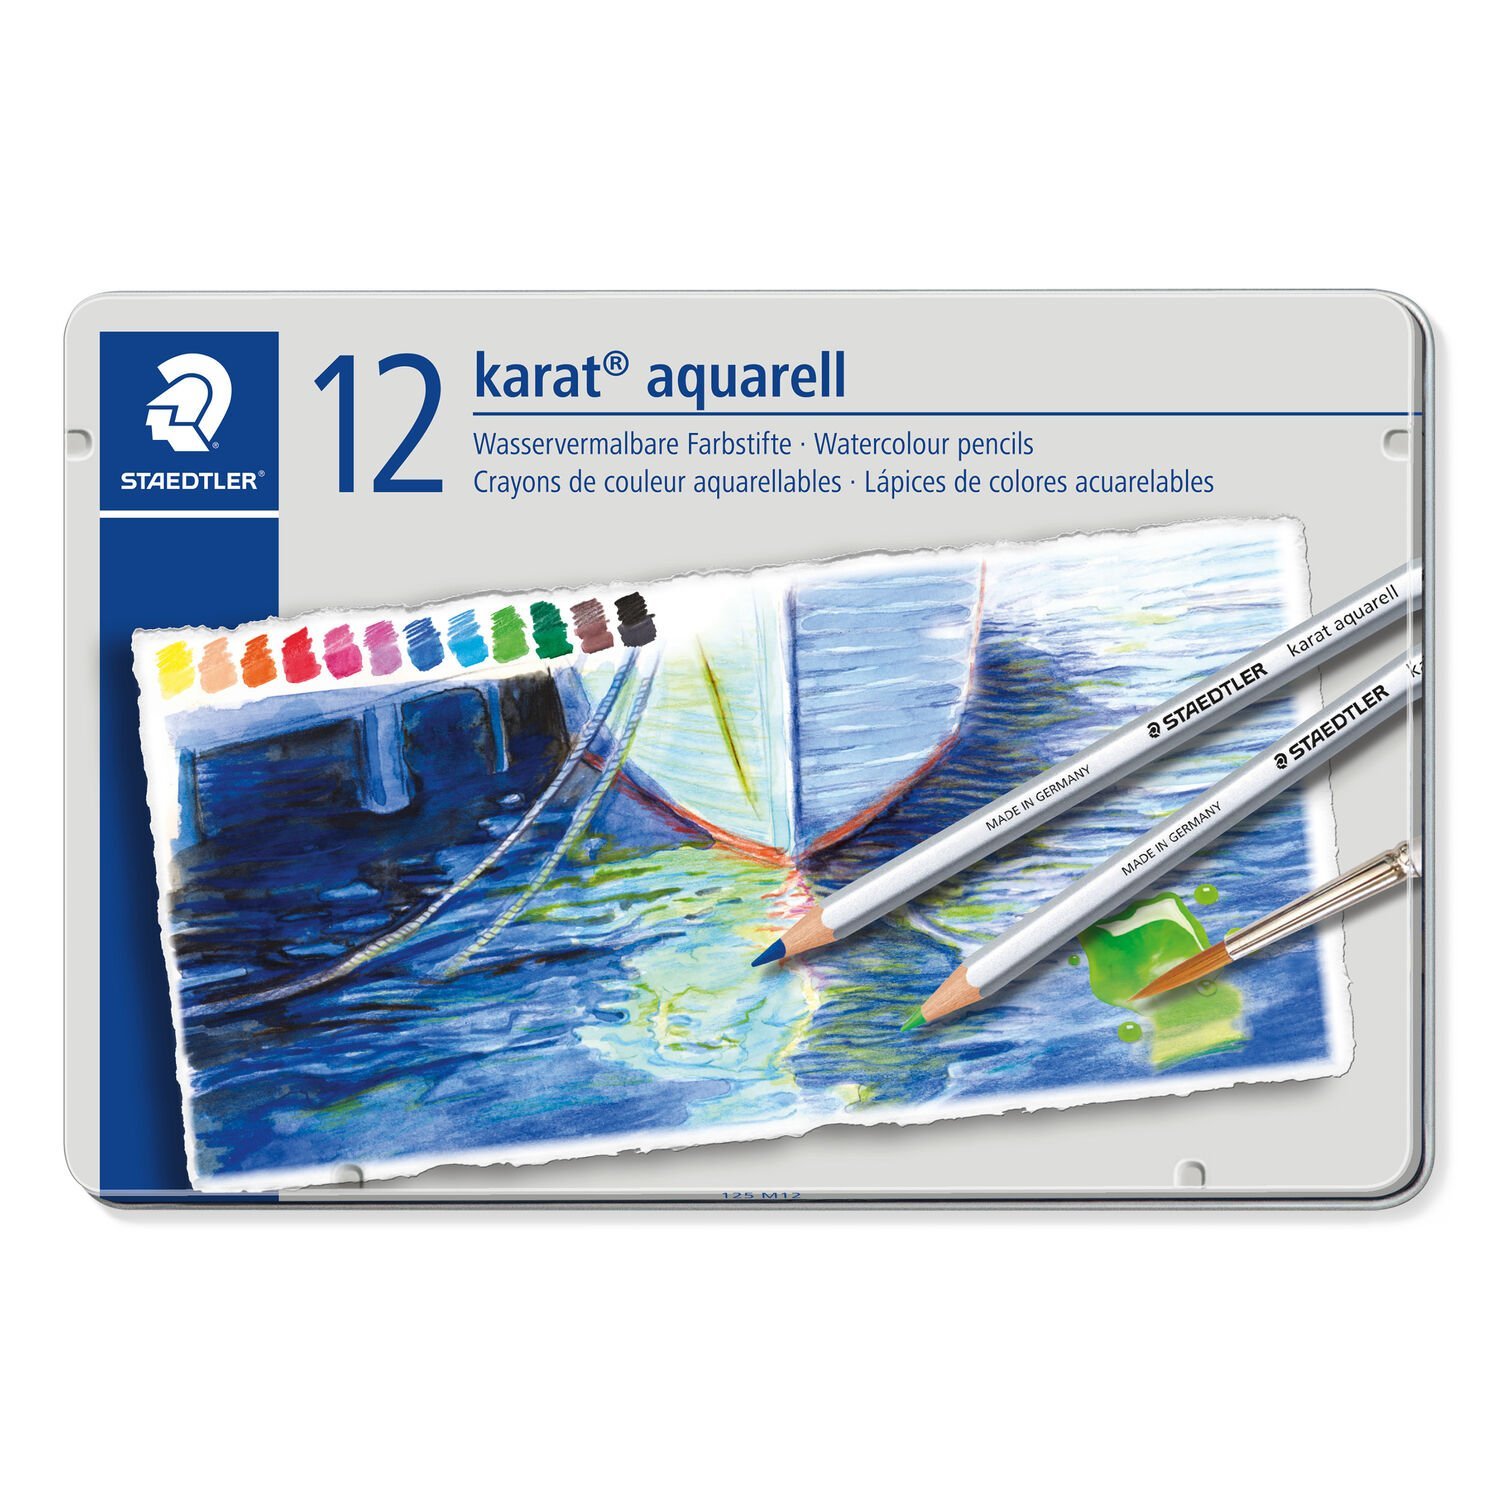 karat® aquarell 125 - Wasservermalbarer Farbstift